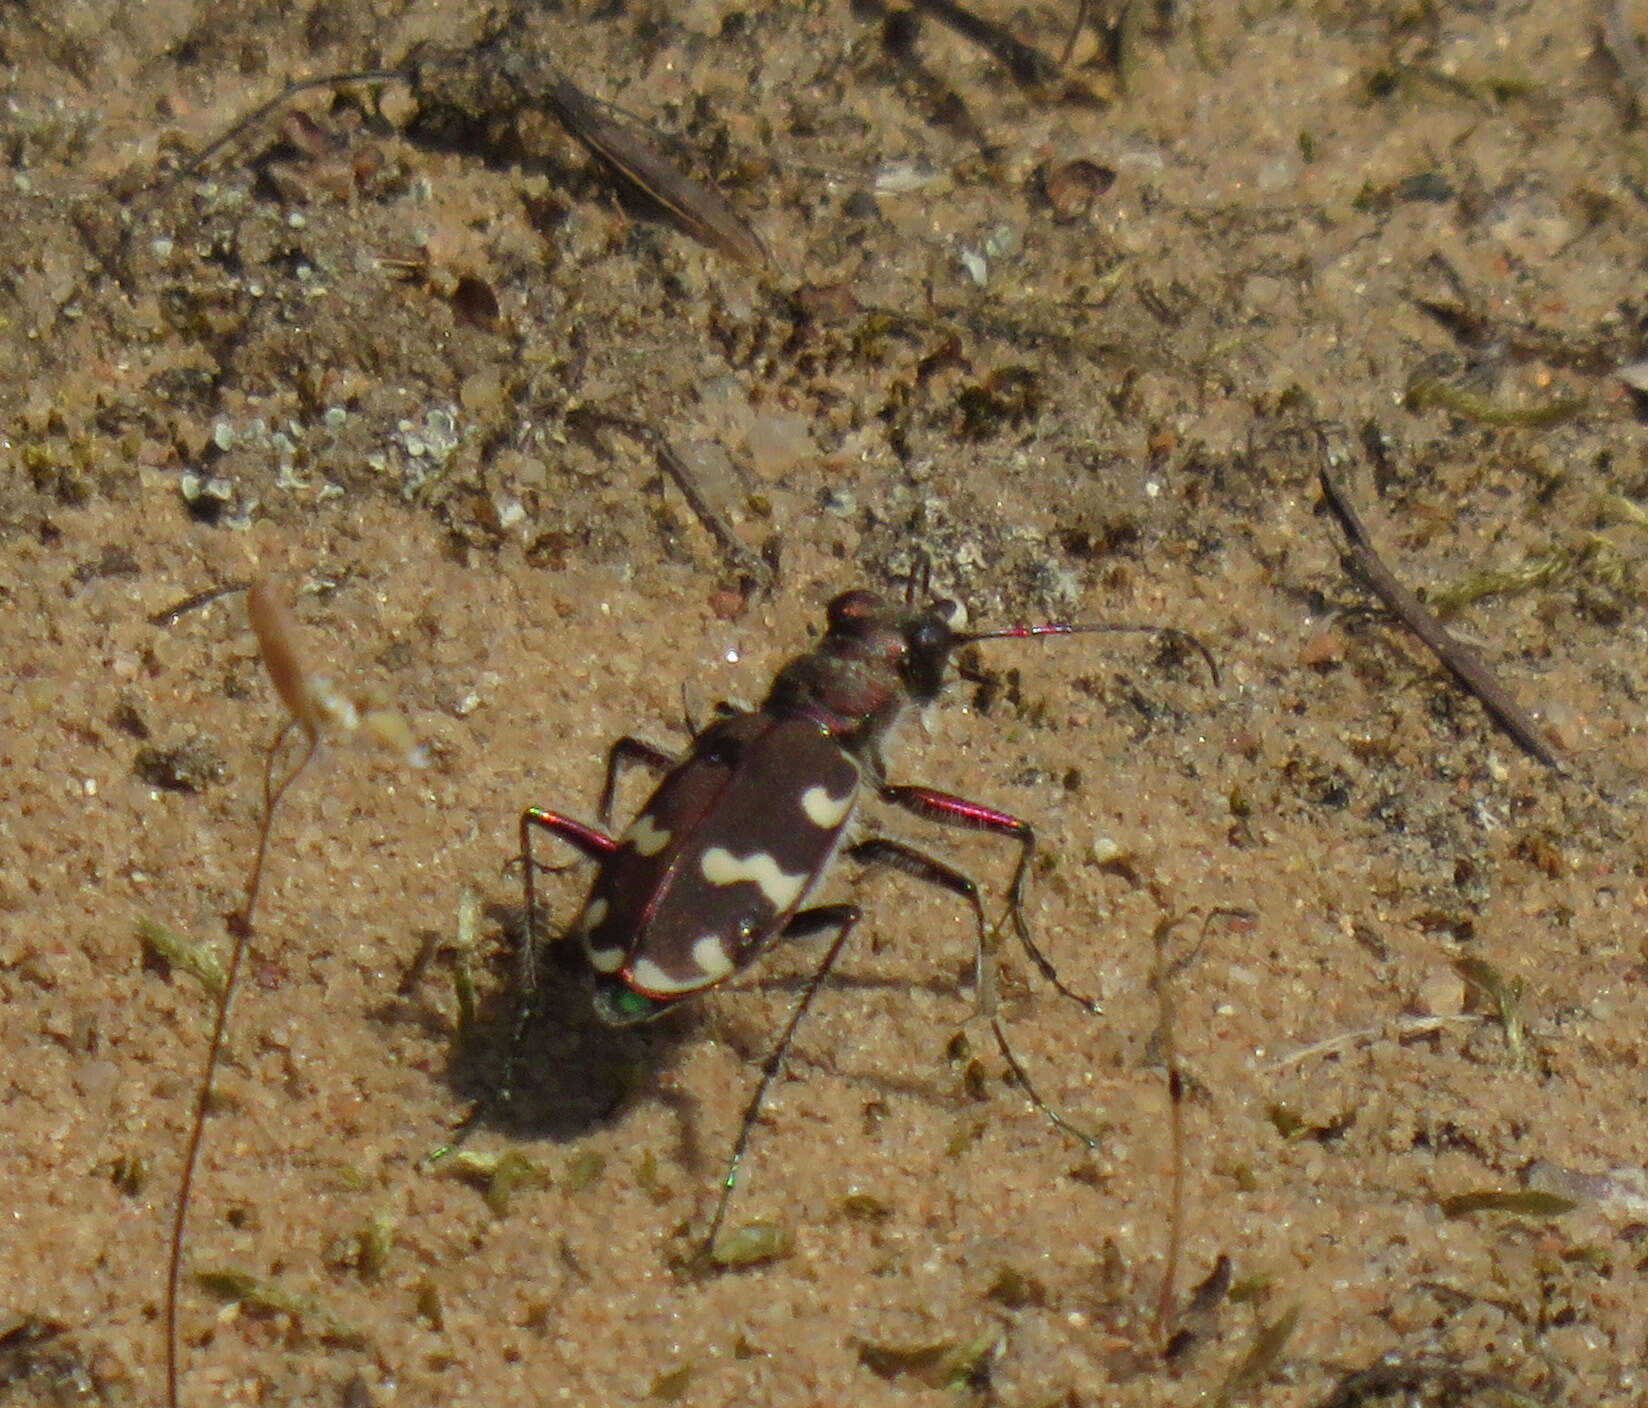 Image of Northern dune tiger beetle